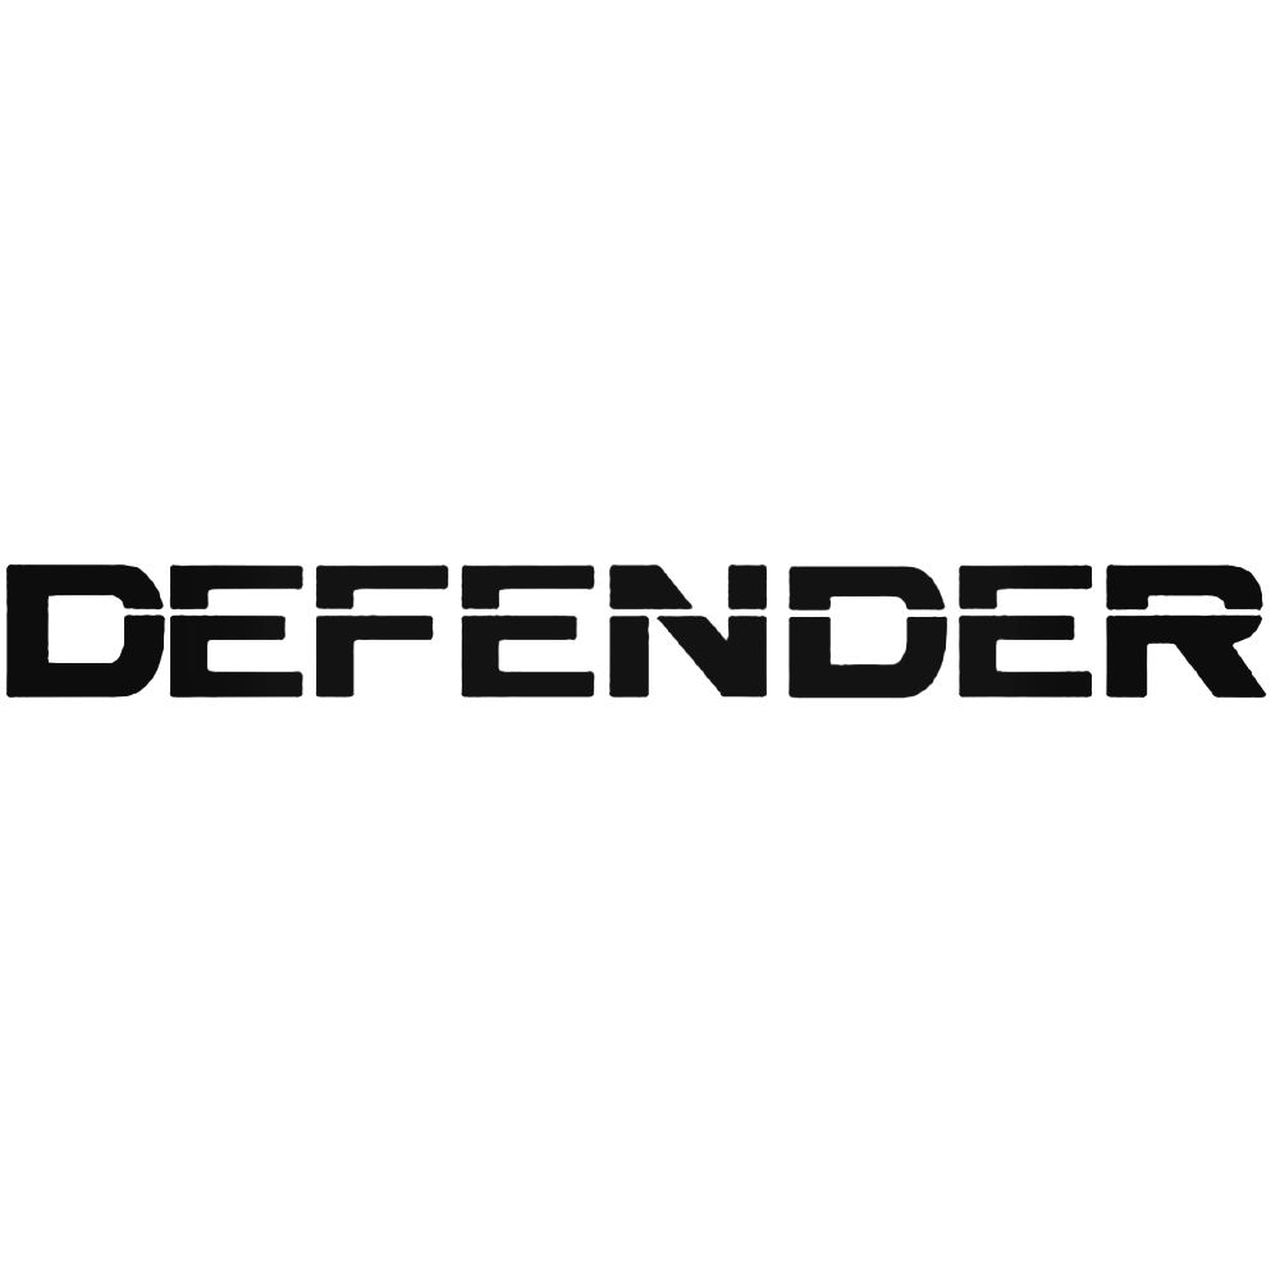 Www defender